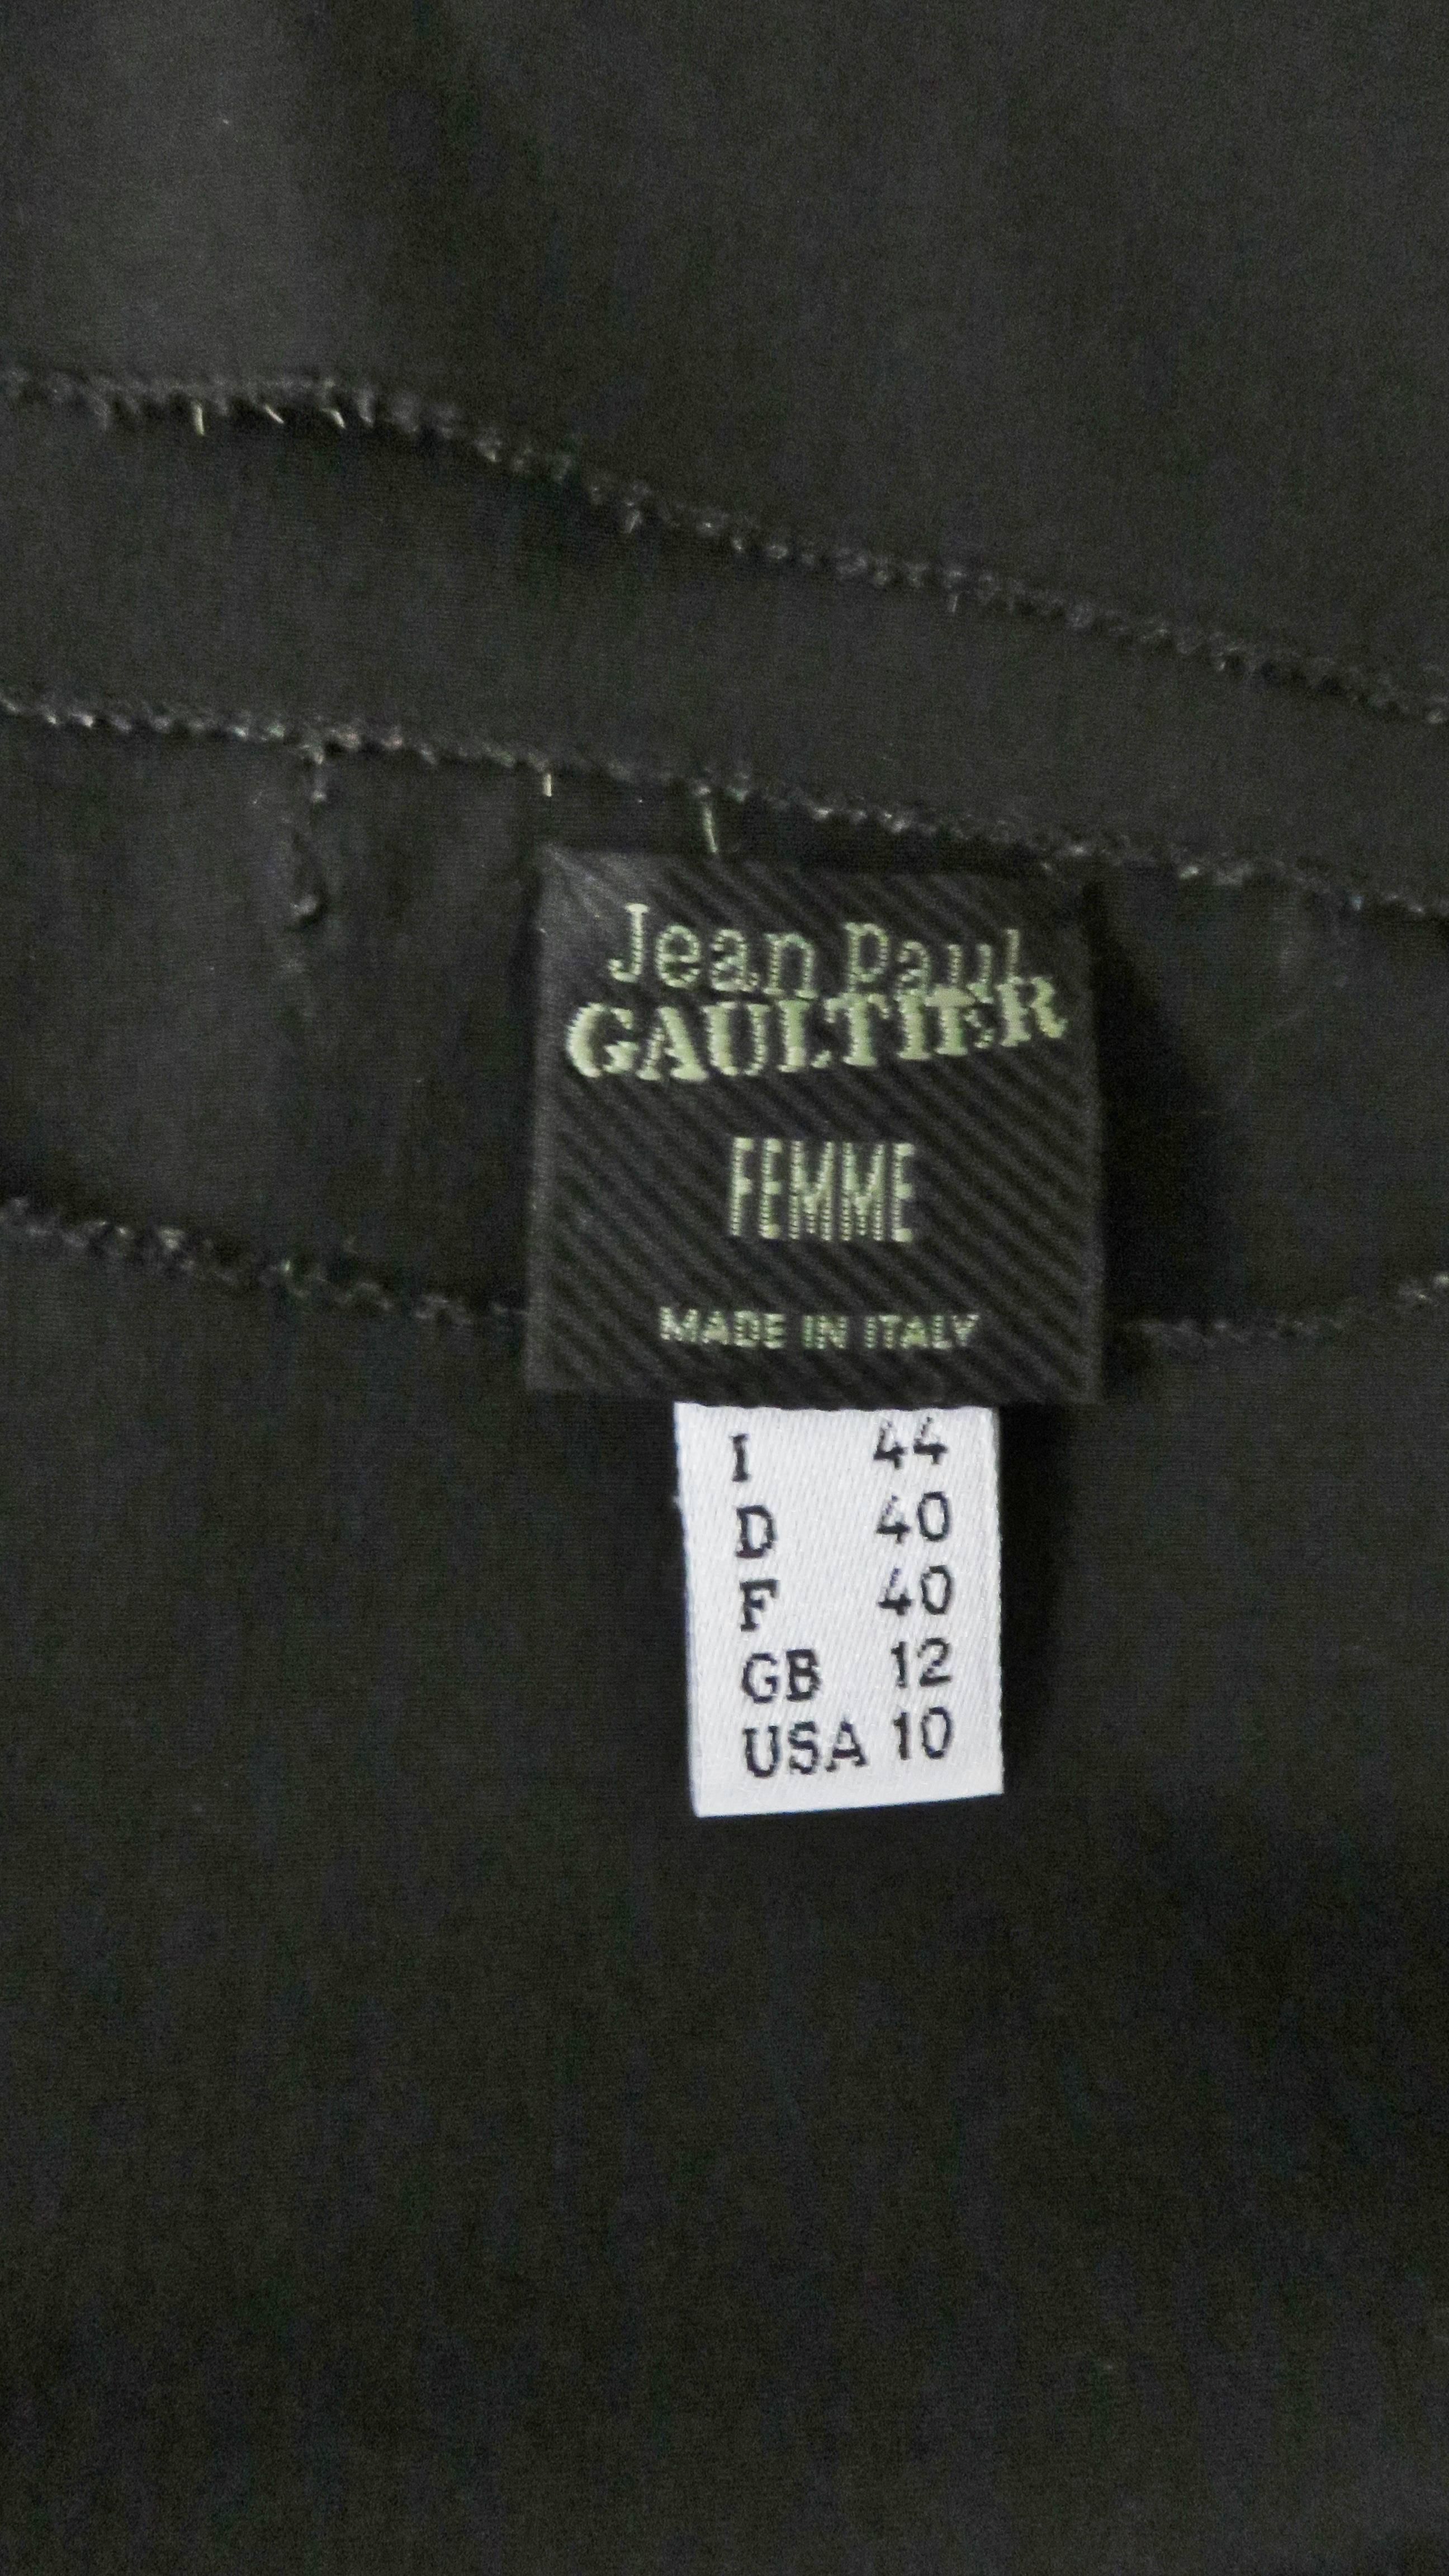 Jean Paul Gaultier Top, Skirt and Sleeves 6